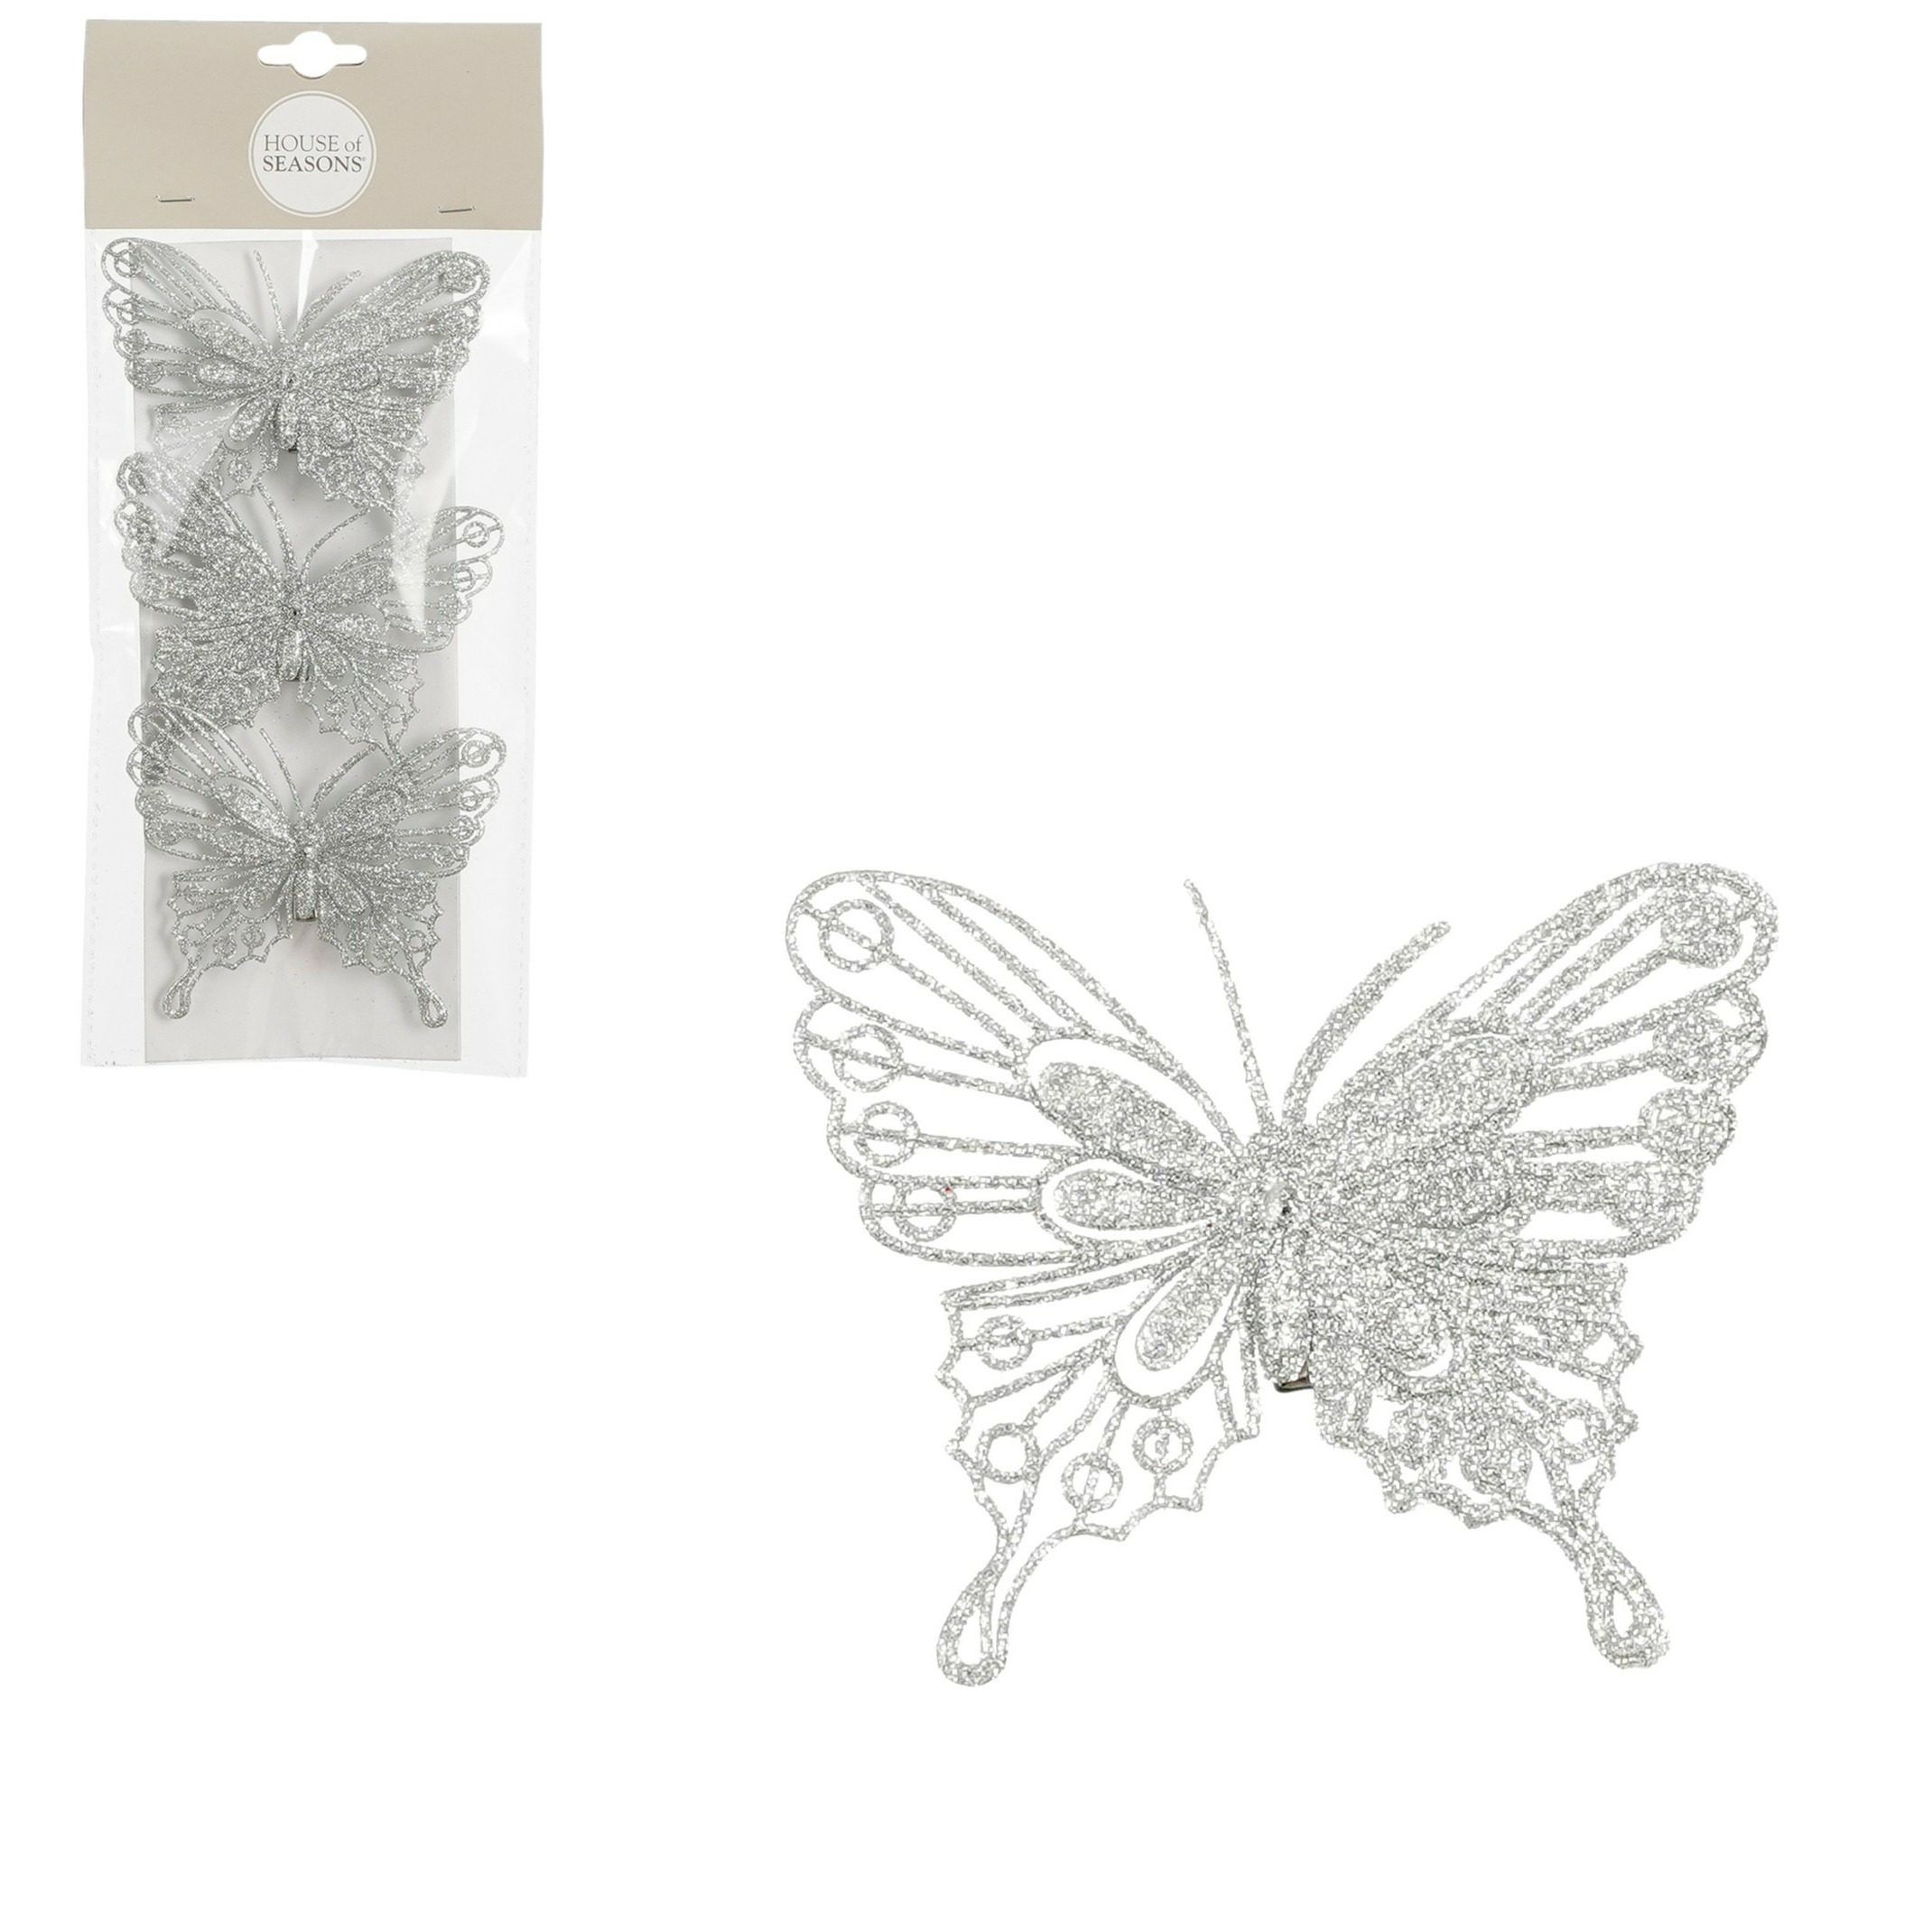 House of Seasons vlinders op clip - 3x stuks - zilver glitter - 10 cm